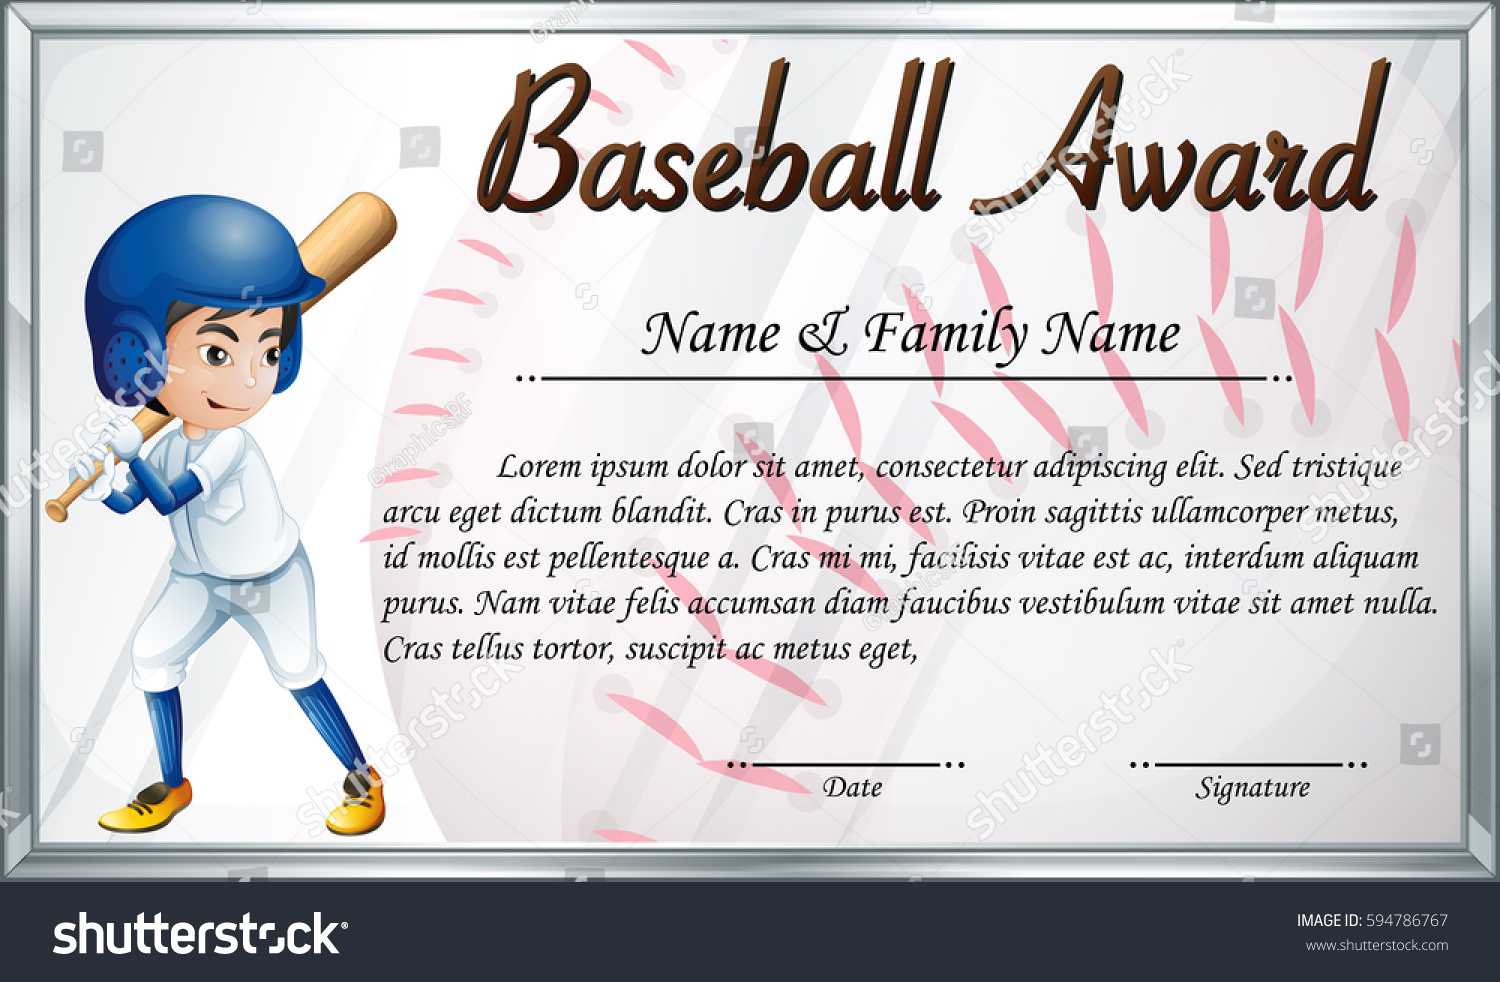 Certificate Template Baseball Award Baseball Player Stock With Softball Award Certificate Template